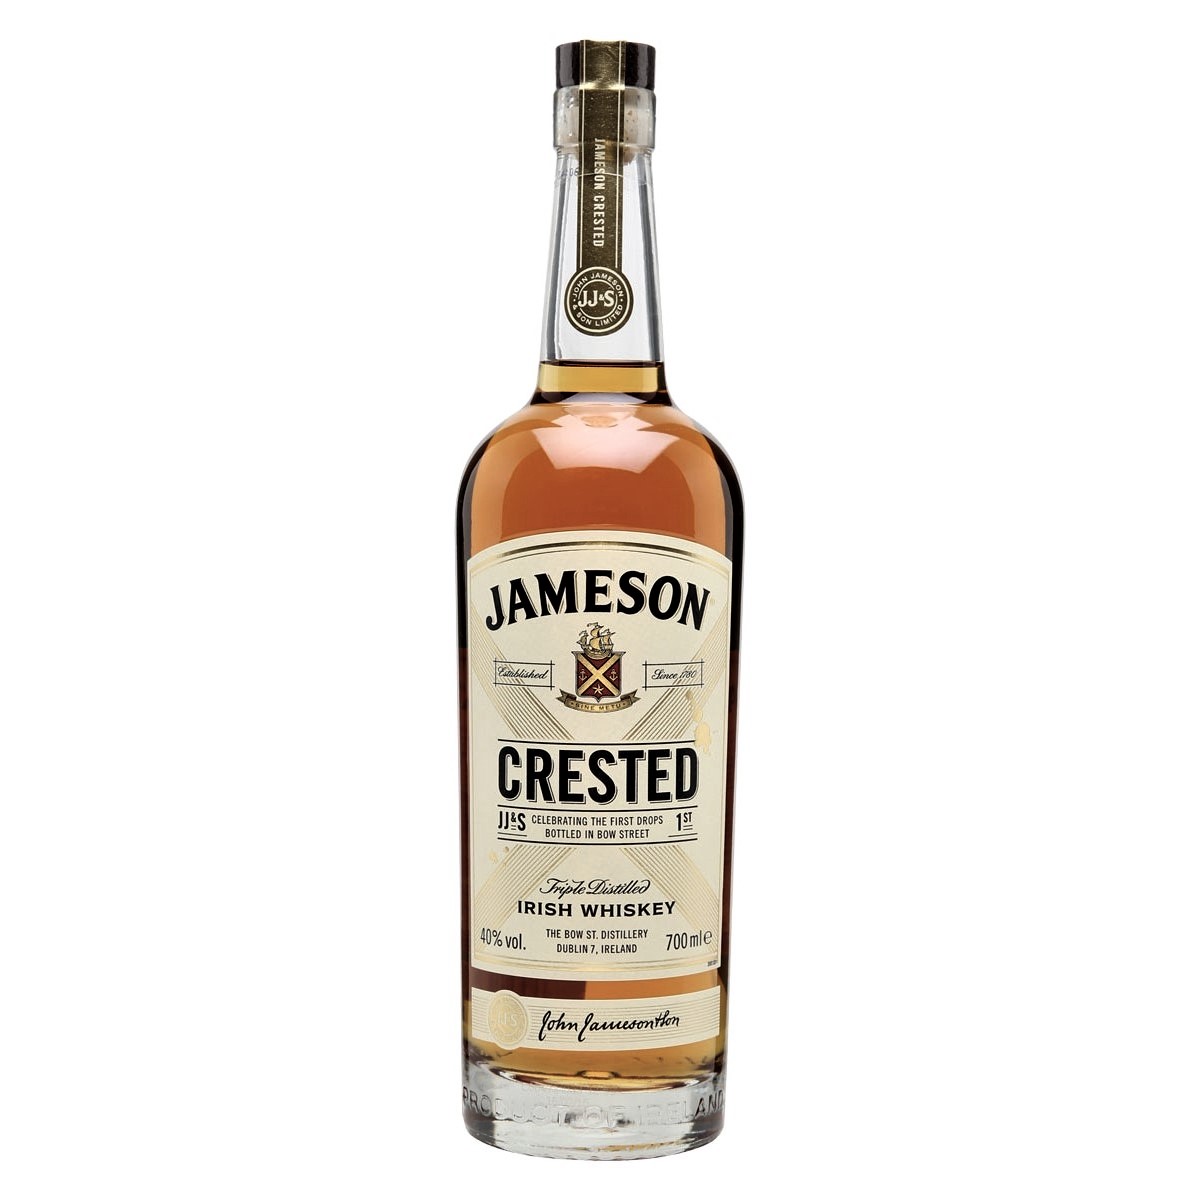 Buy Jameson Crested Irish Whiskey Online